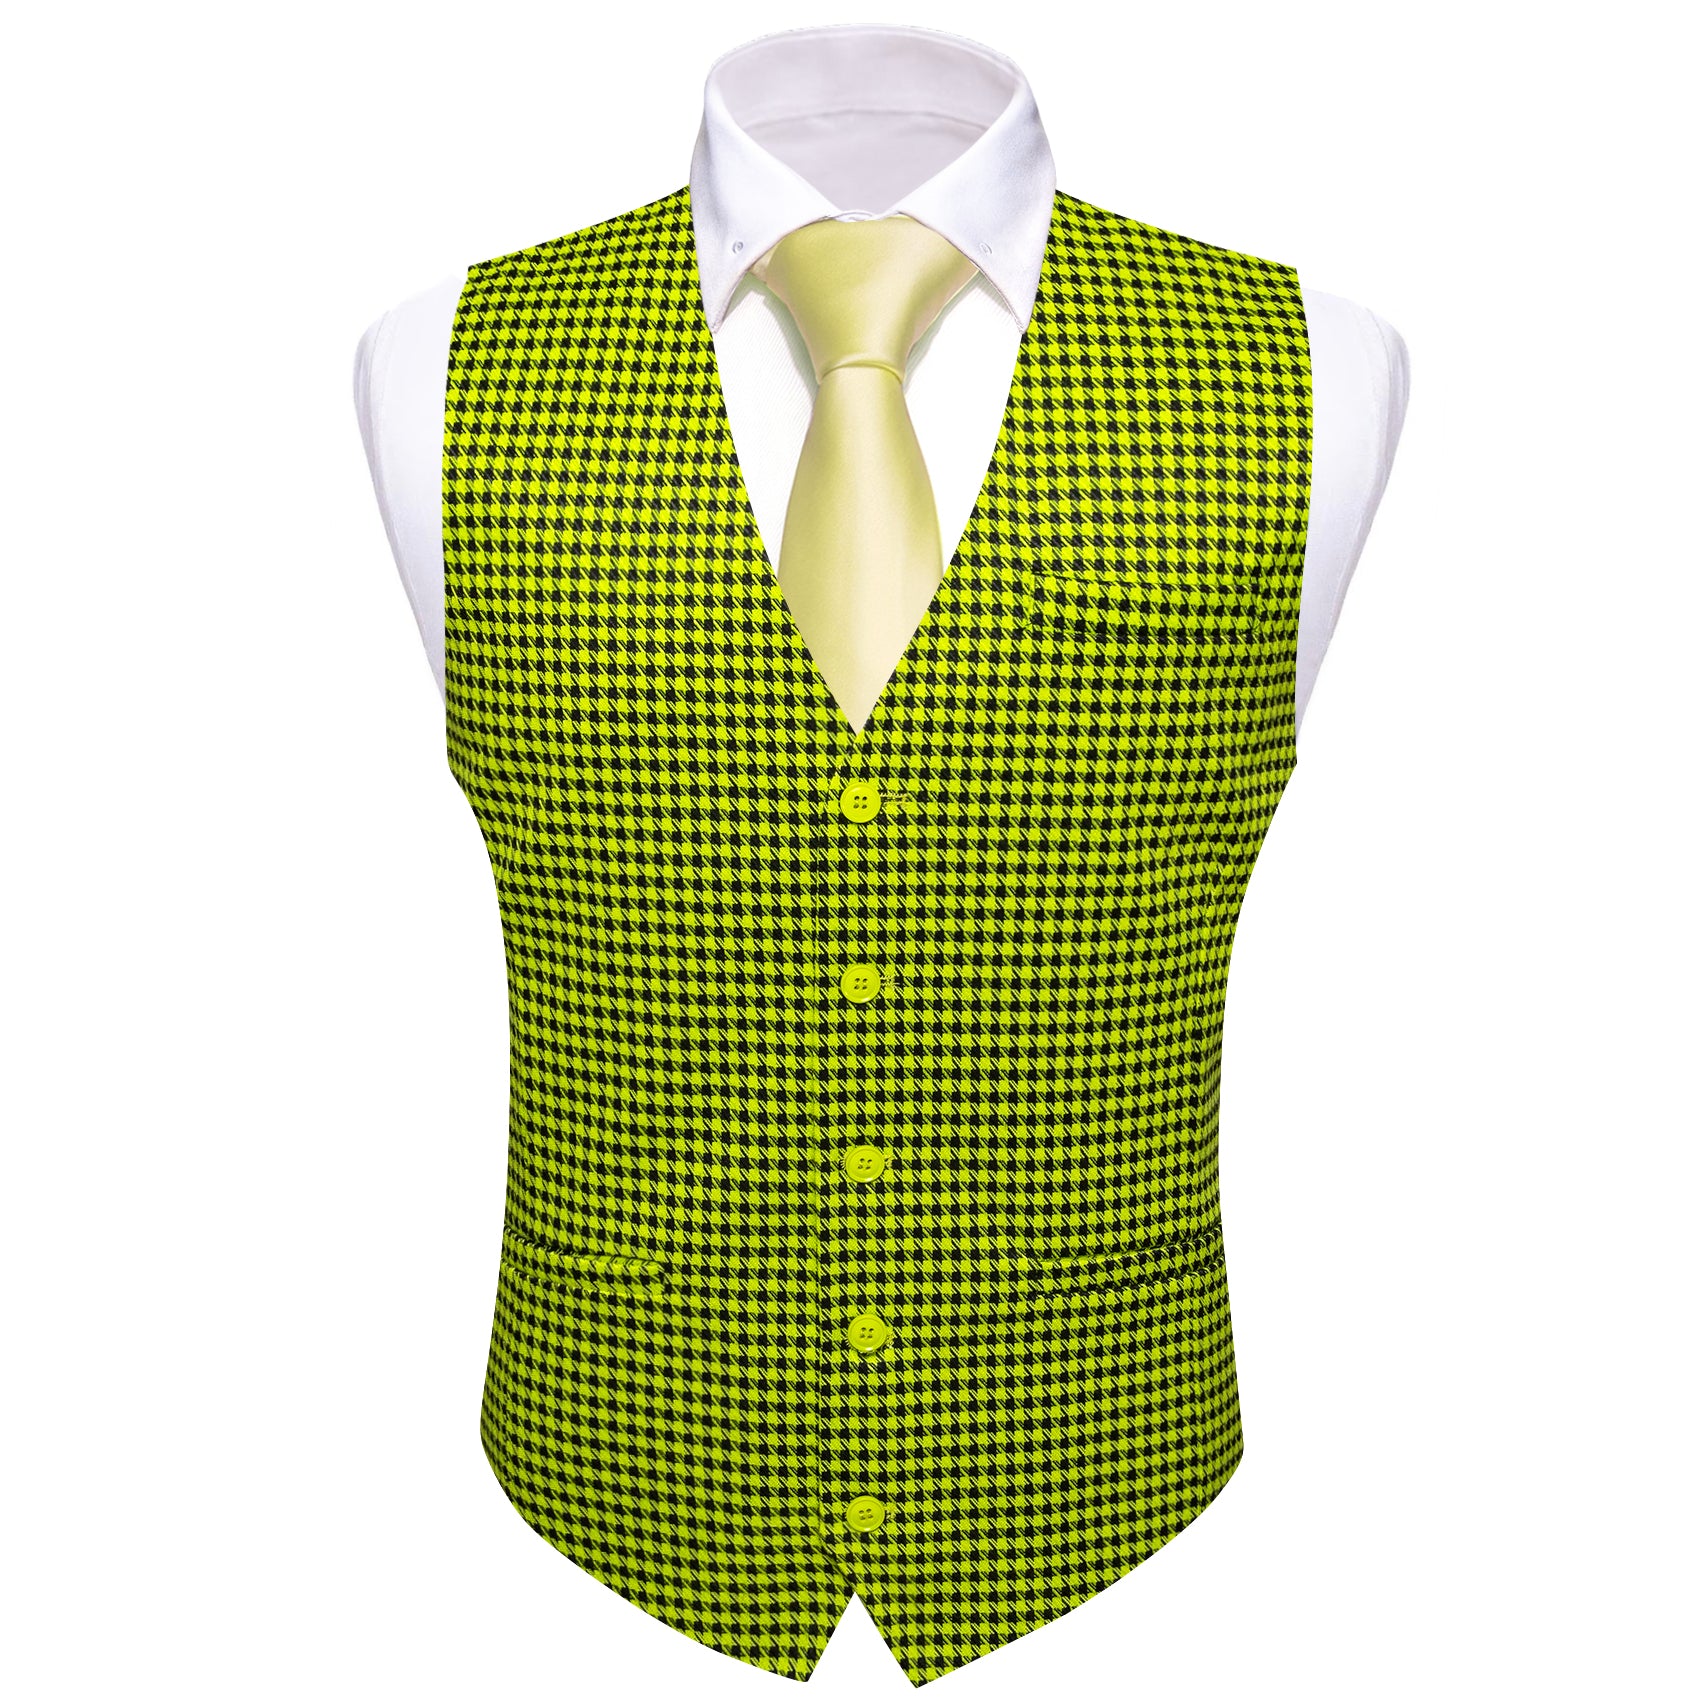 Barry.wang Yellow Green Plaid Waistcoat Vest Daily Wear